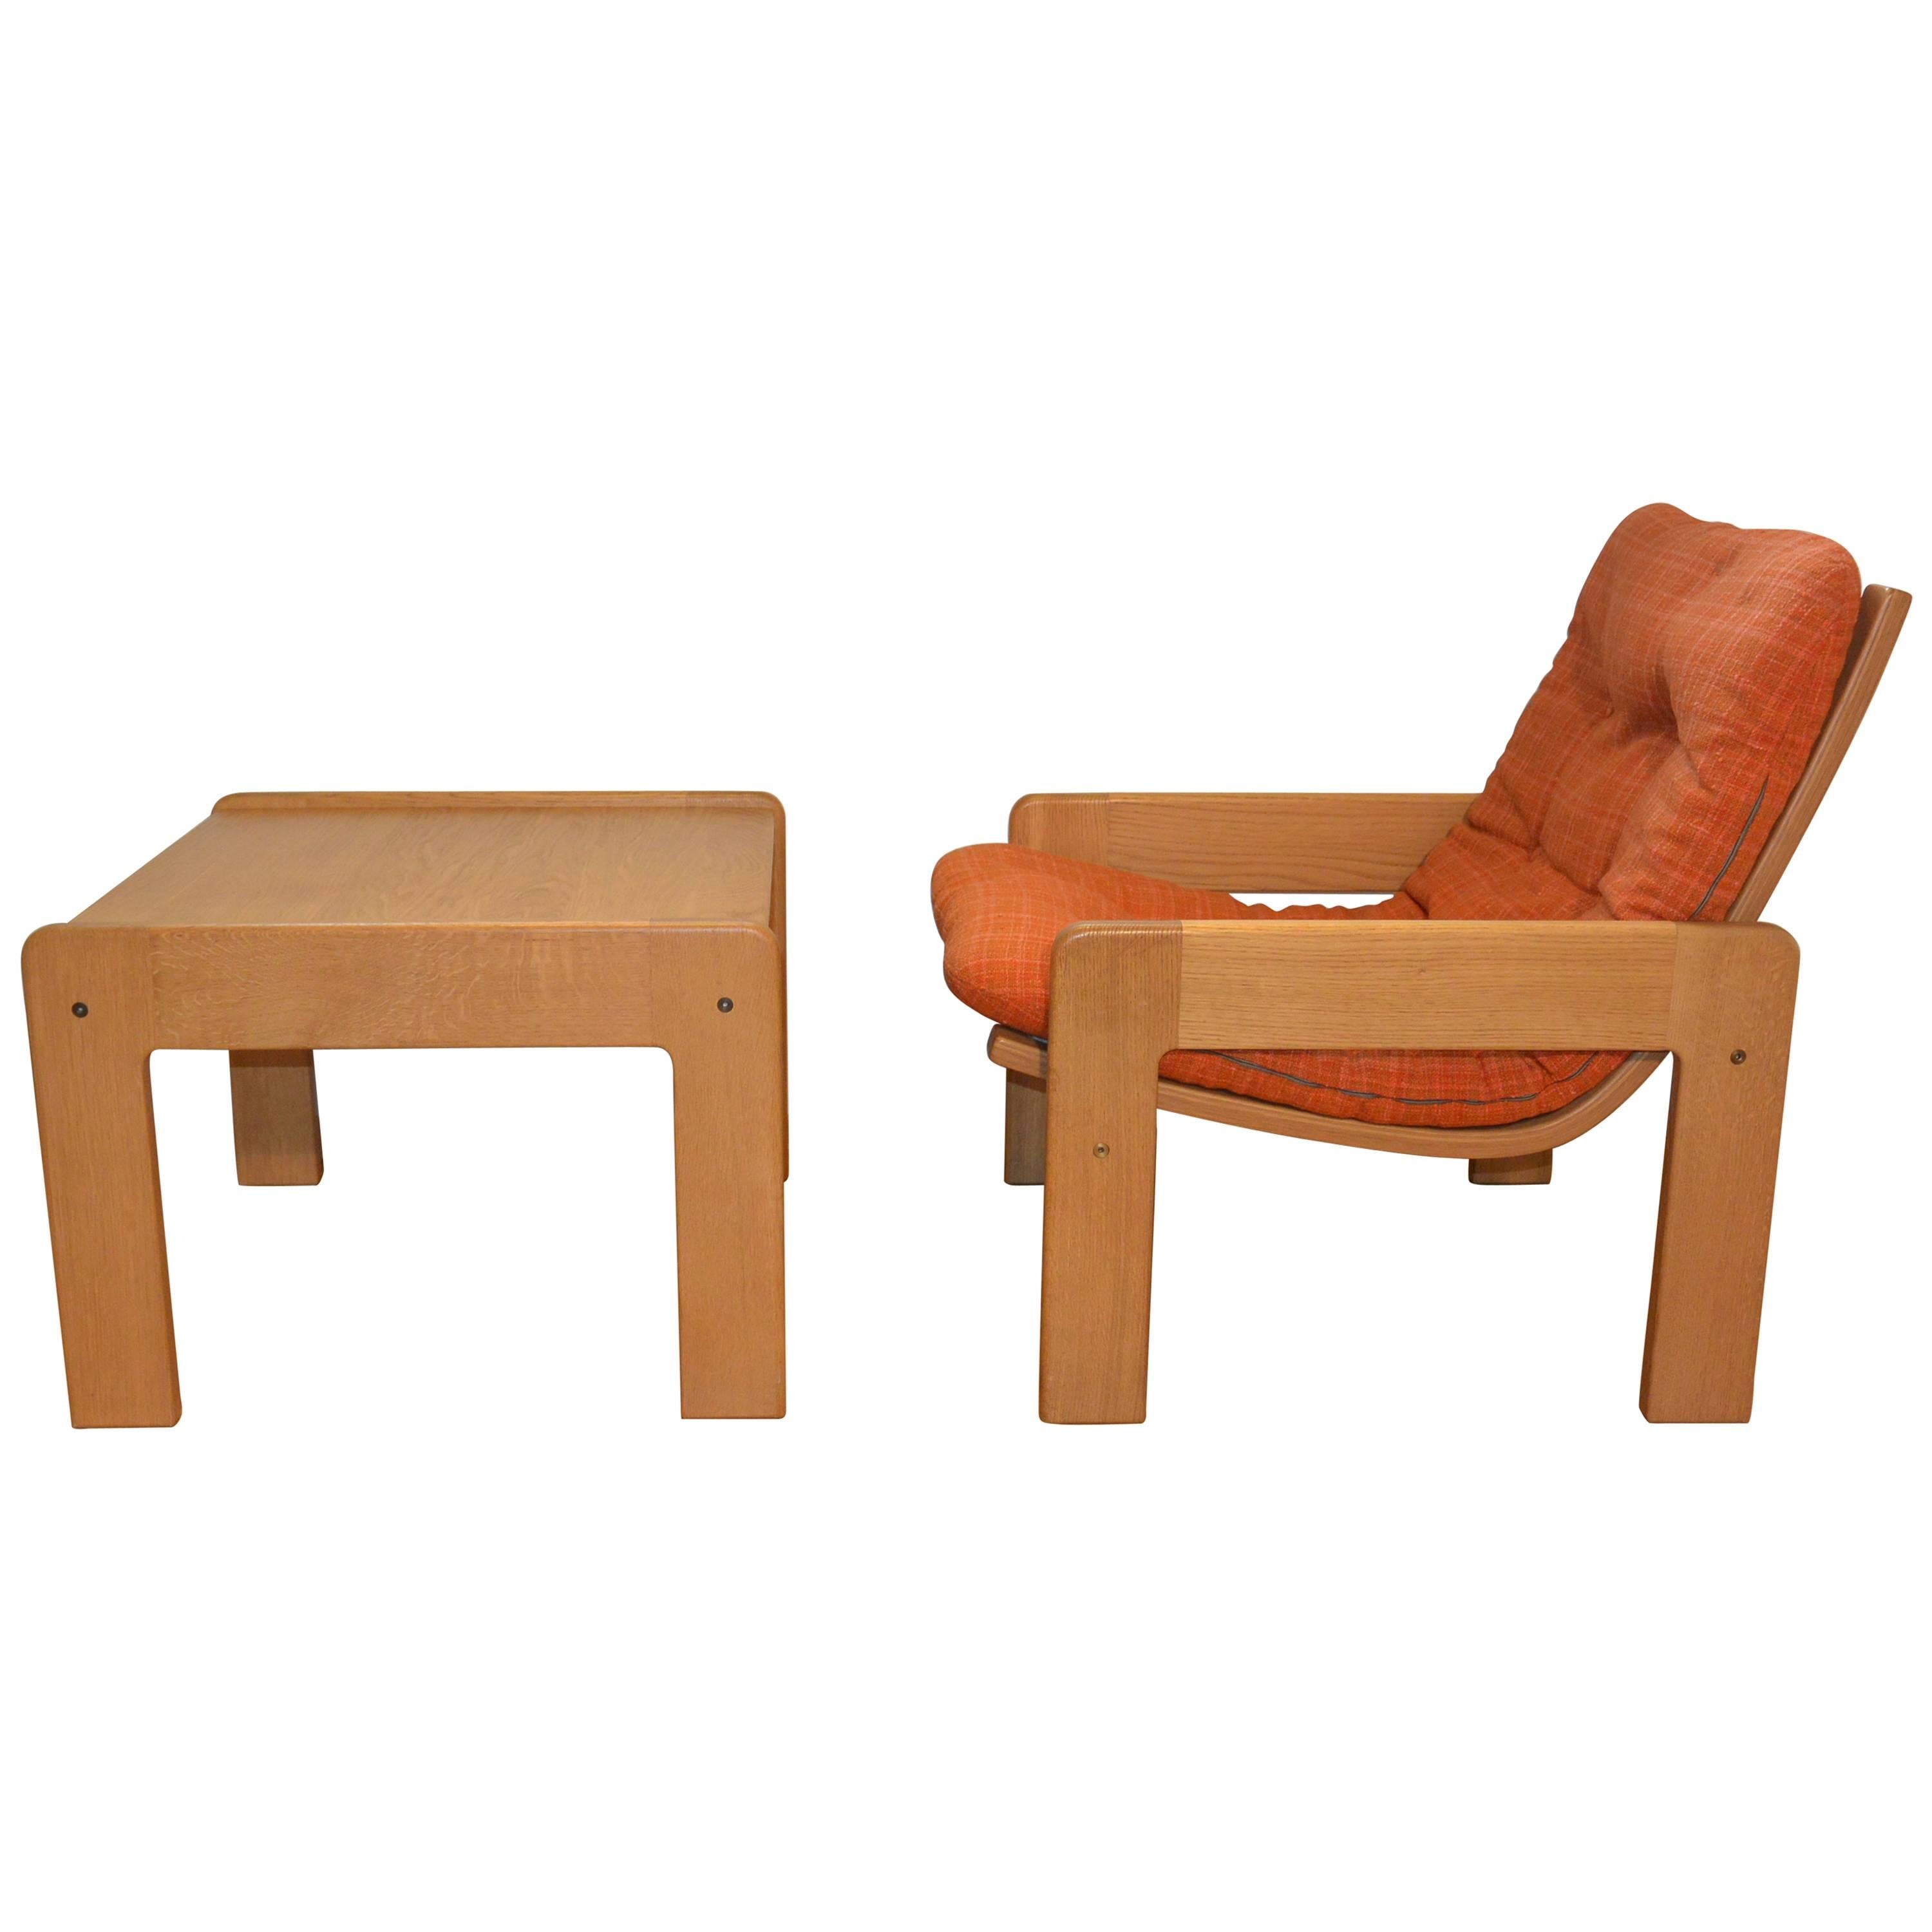 Pair of Yngve Ekström Oak Table and Chair, Swedish For Sale